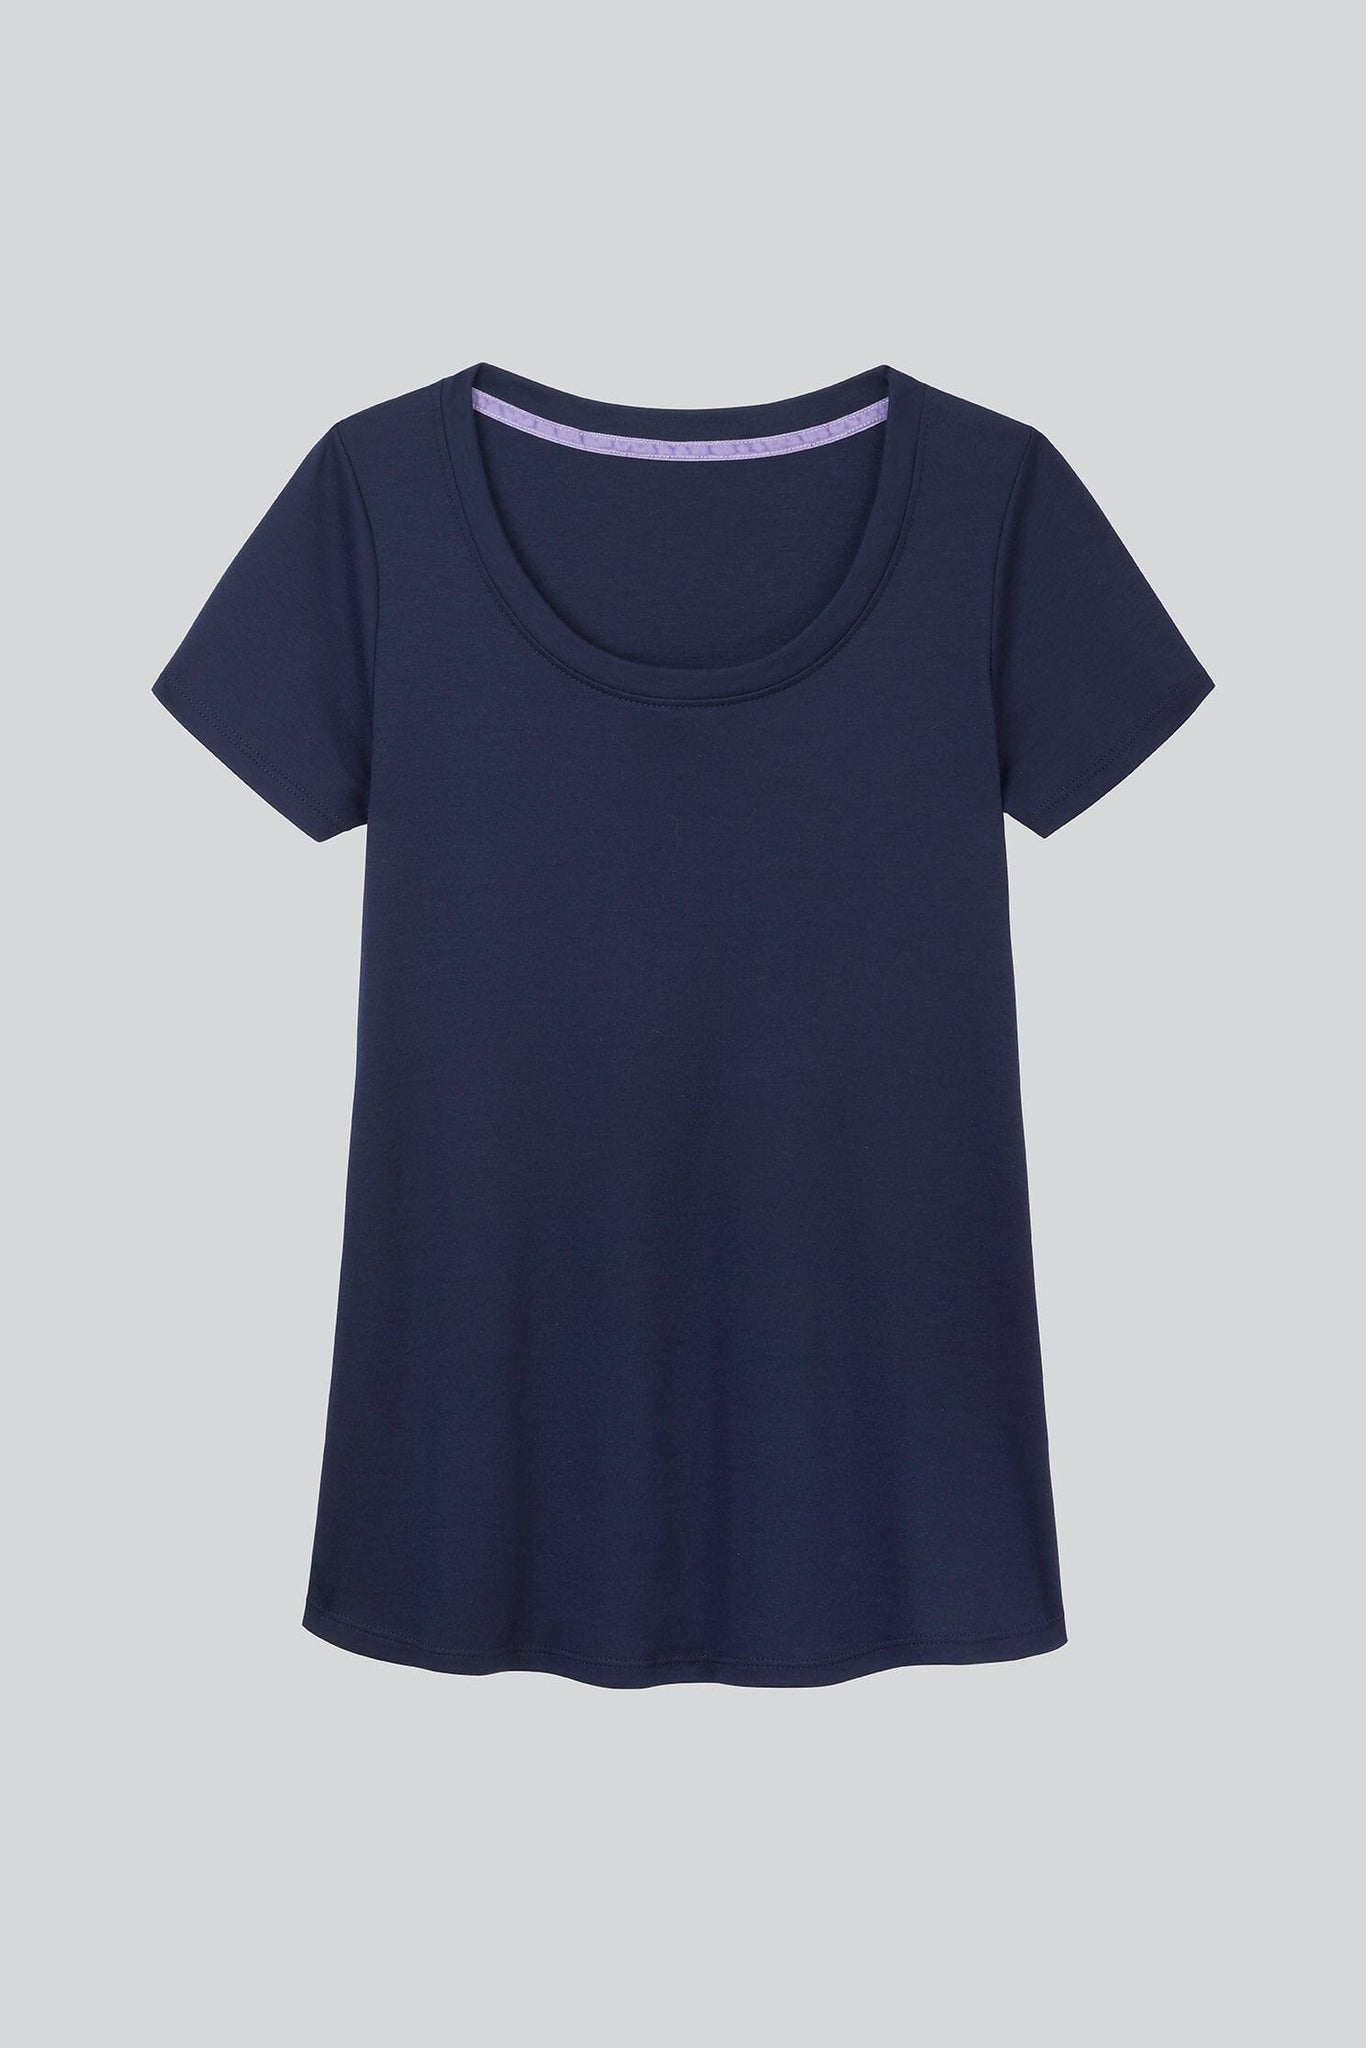 Macpac Women's Modal T-Shirt